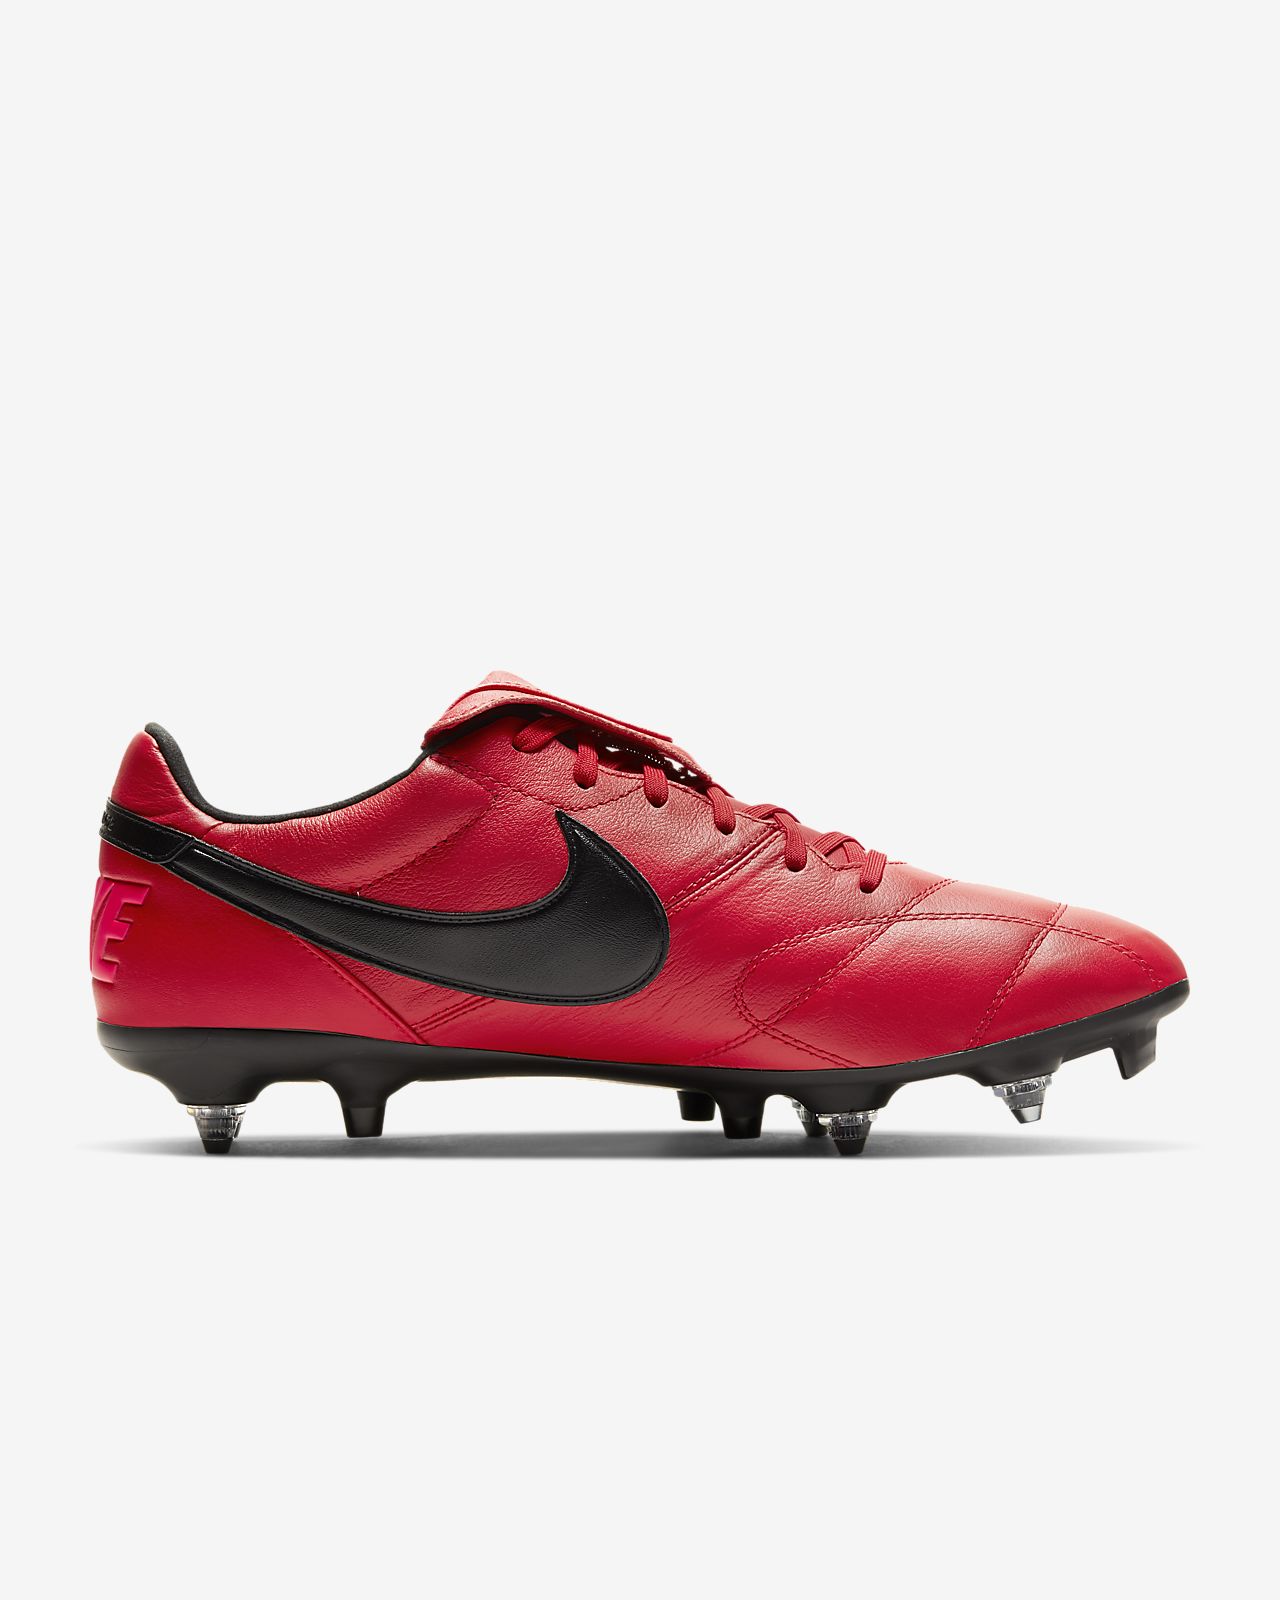 Nike Premier Ii Anti Clog Traction Sg Pro Soft Ground Football